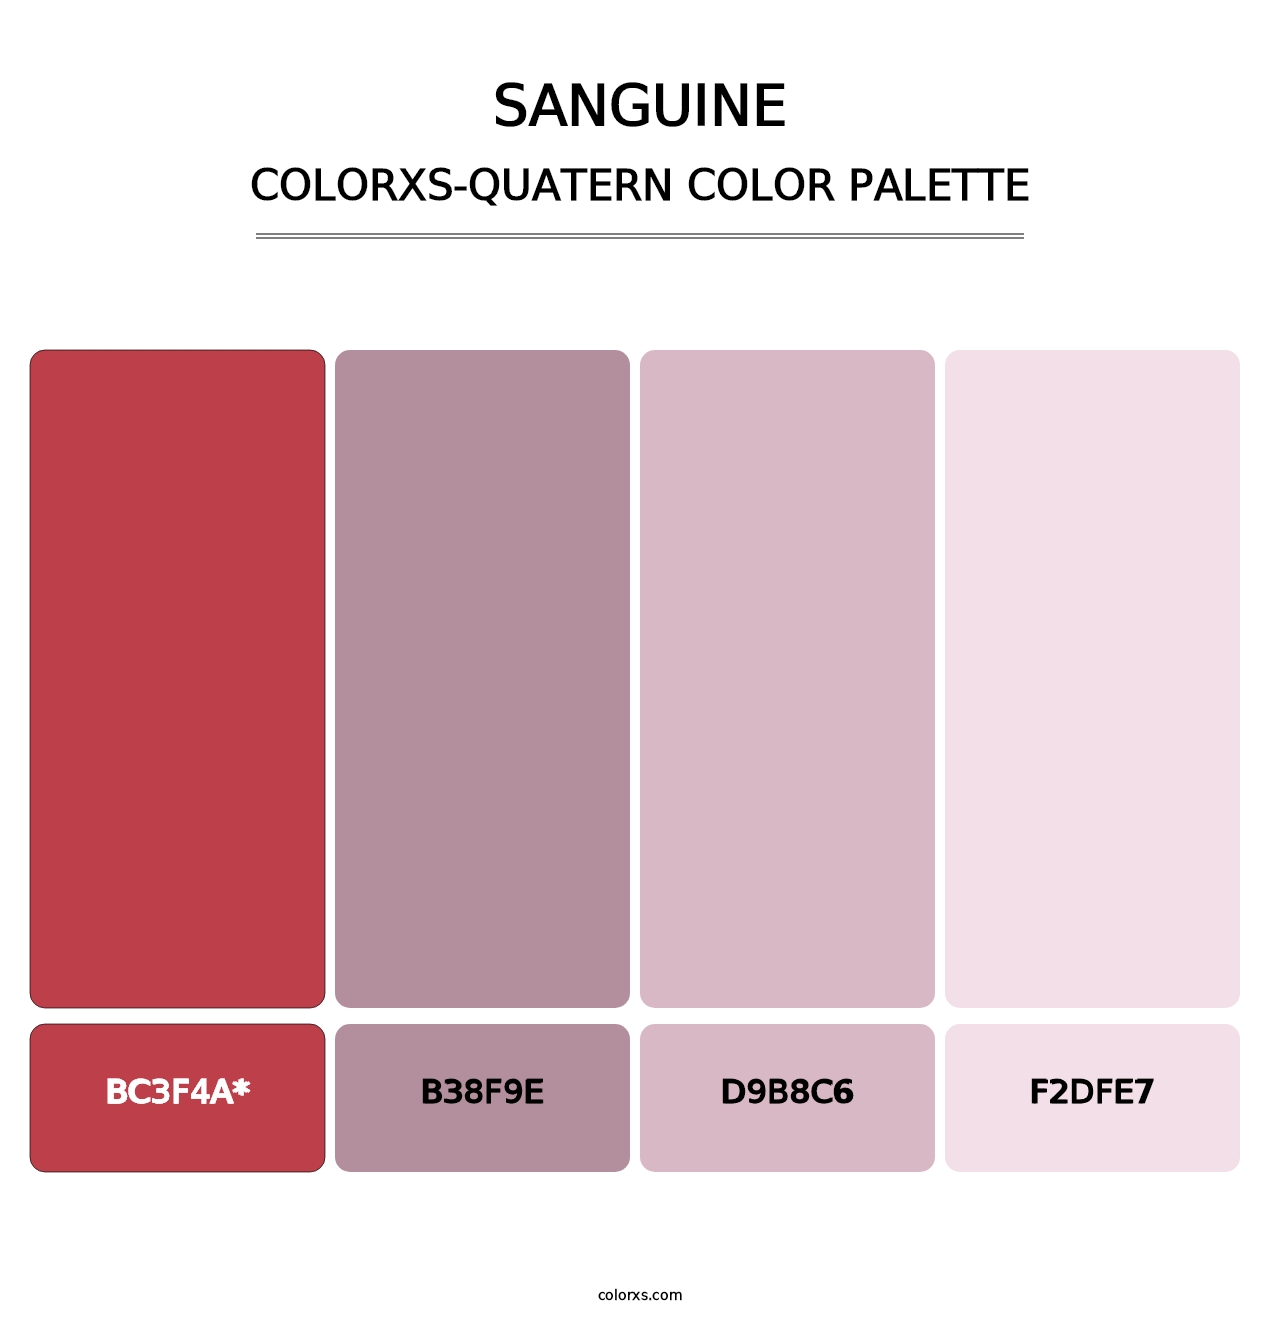 Sanguine - Colorxs Quatern Palette